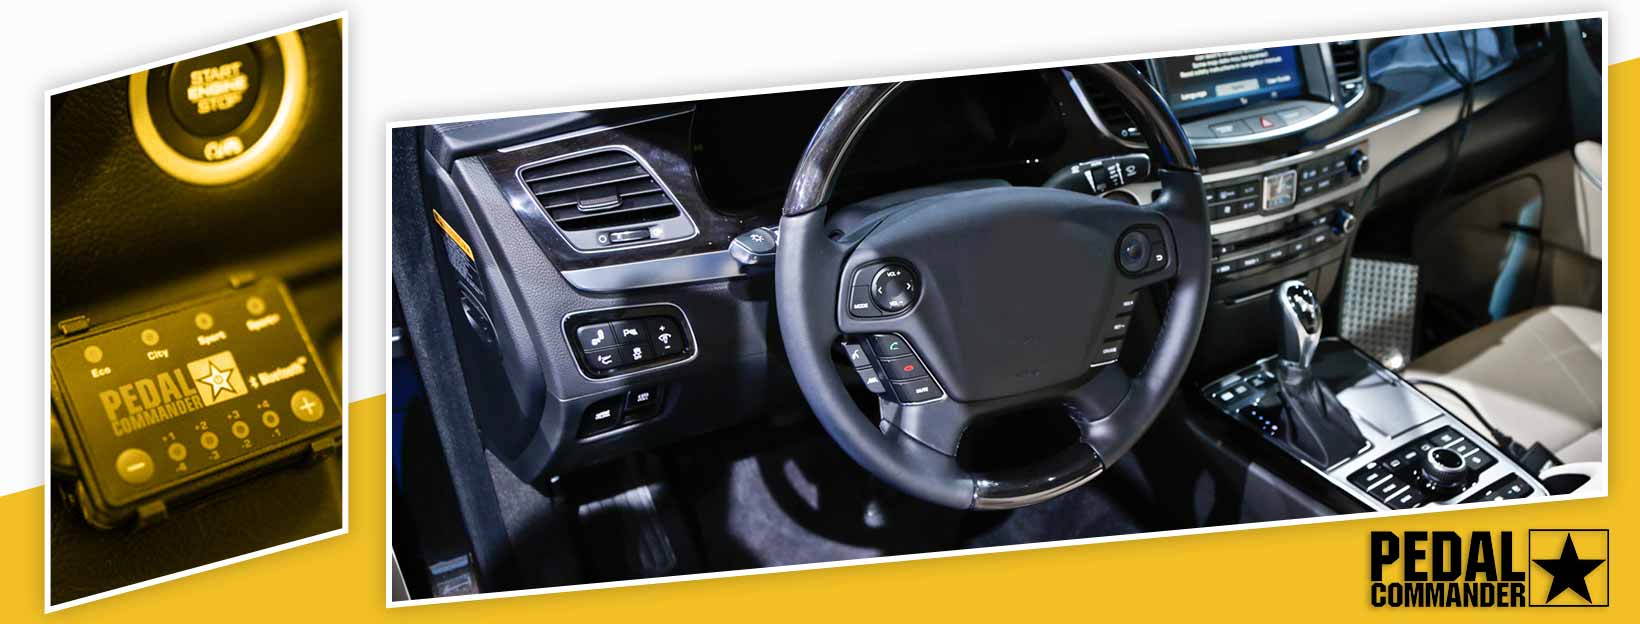 Pedal Commander for Hyundai Equus - interior